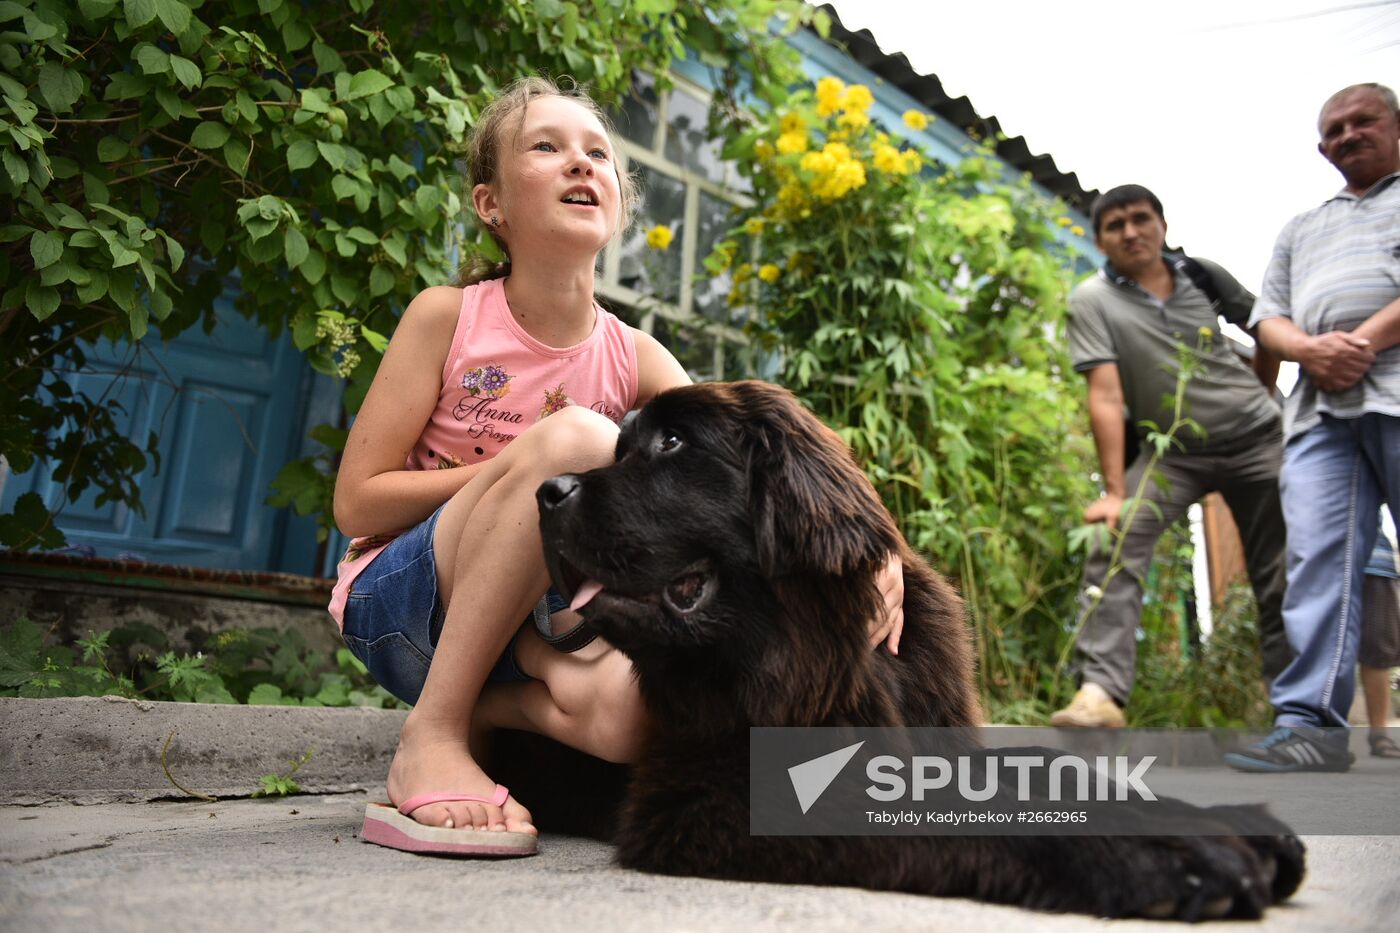 Dasha Yaitskaya with Newfoundland puppy, a gift from Russian President Vladimir Putin